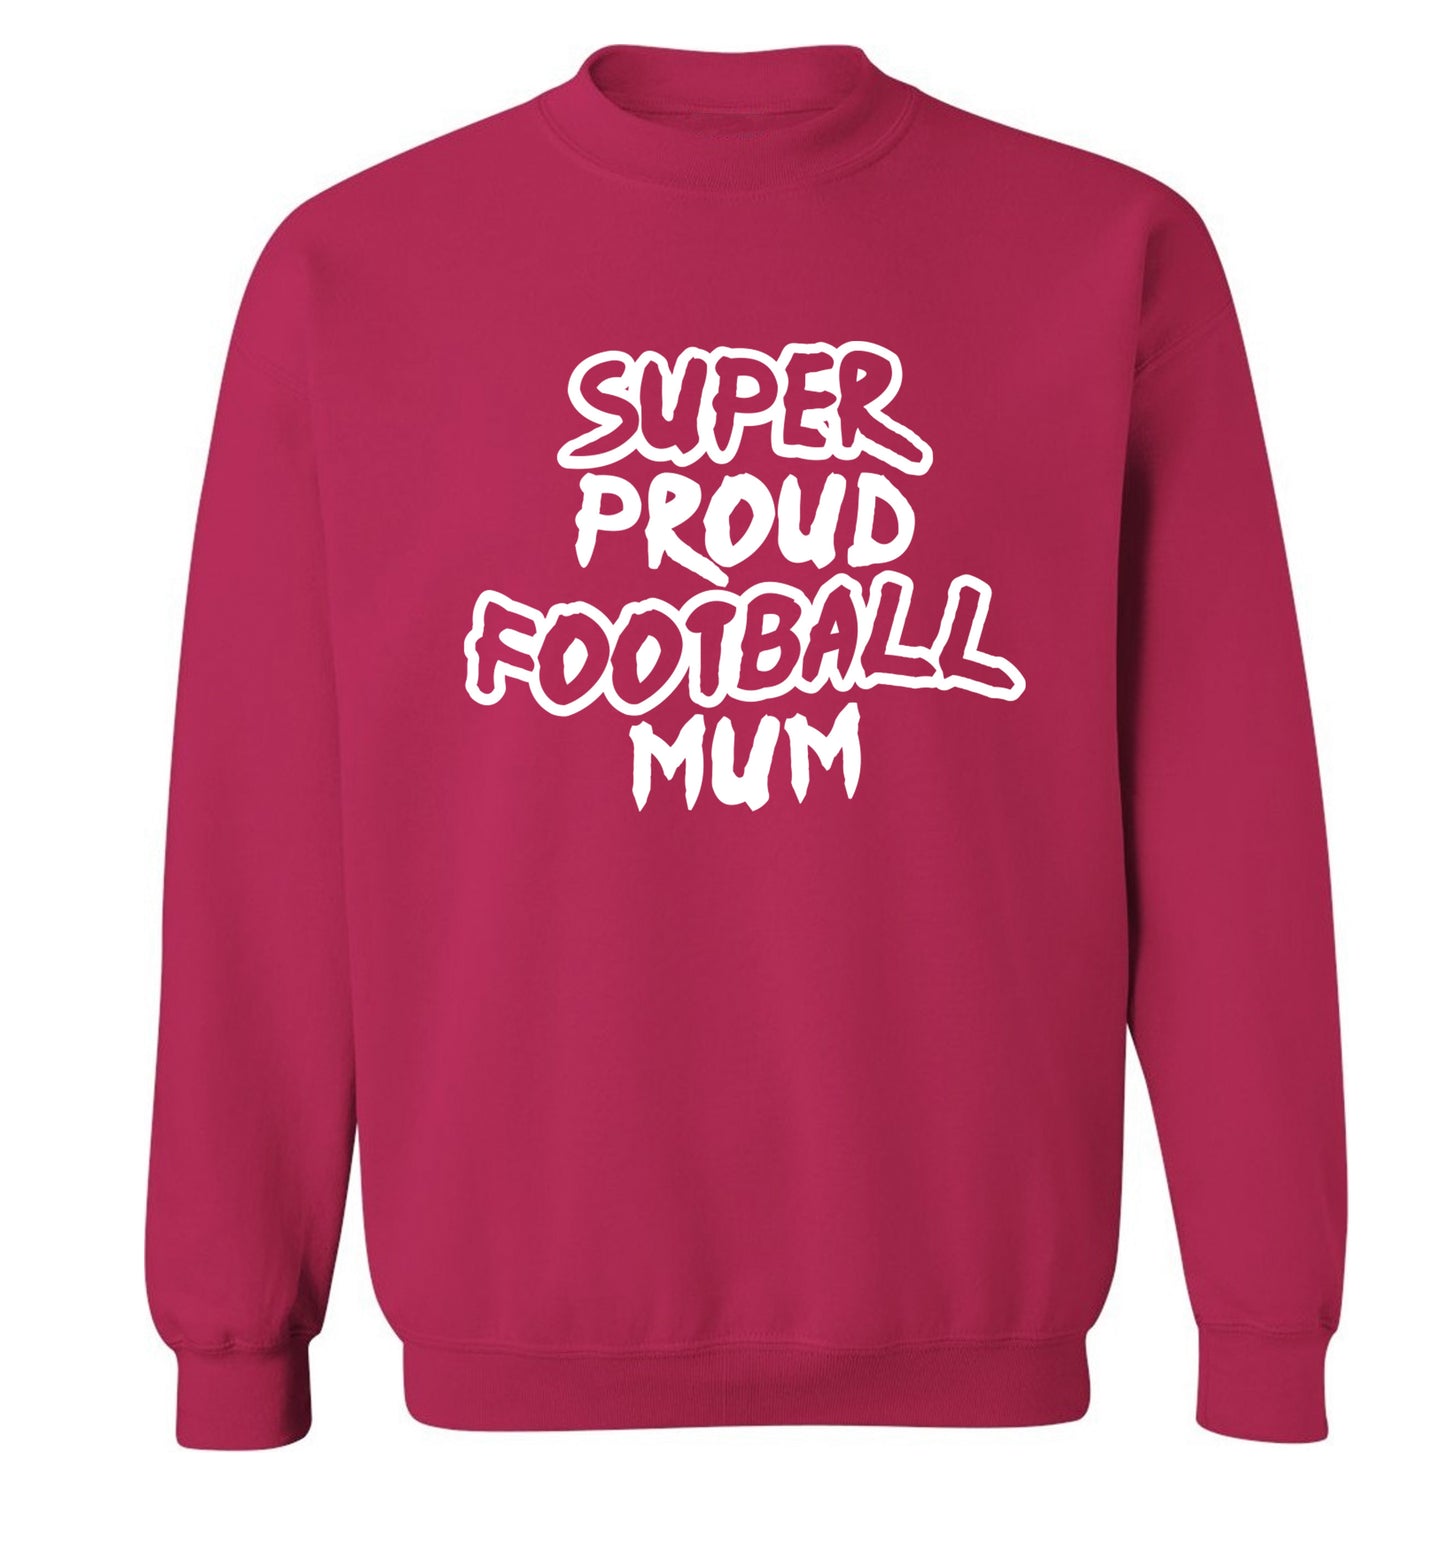 Super proud football mum Adult's unisexpink Sweater 2XL